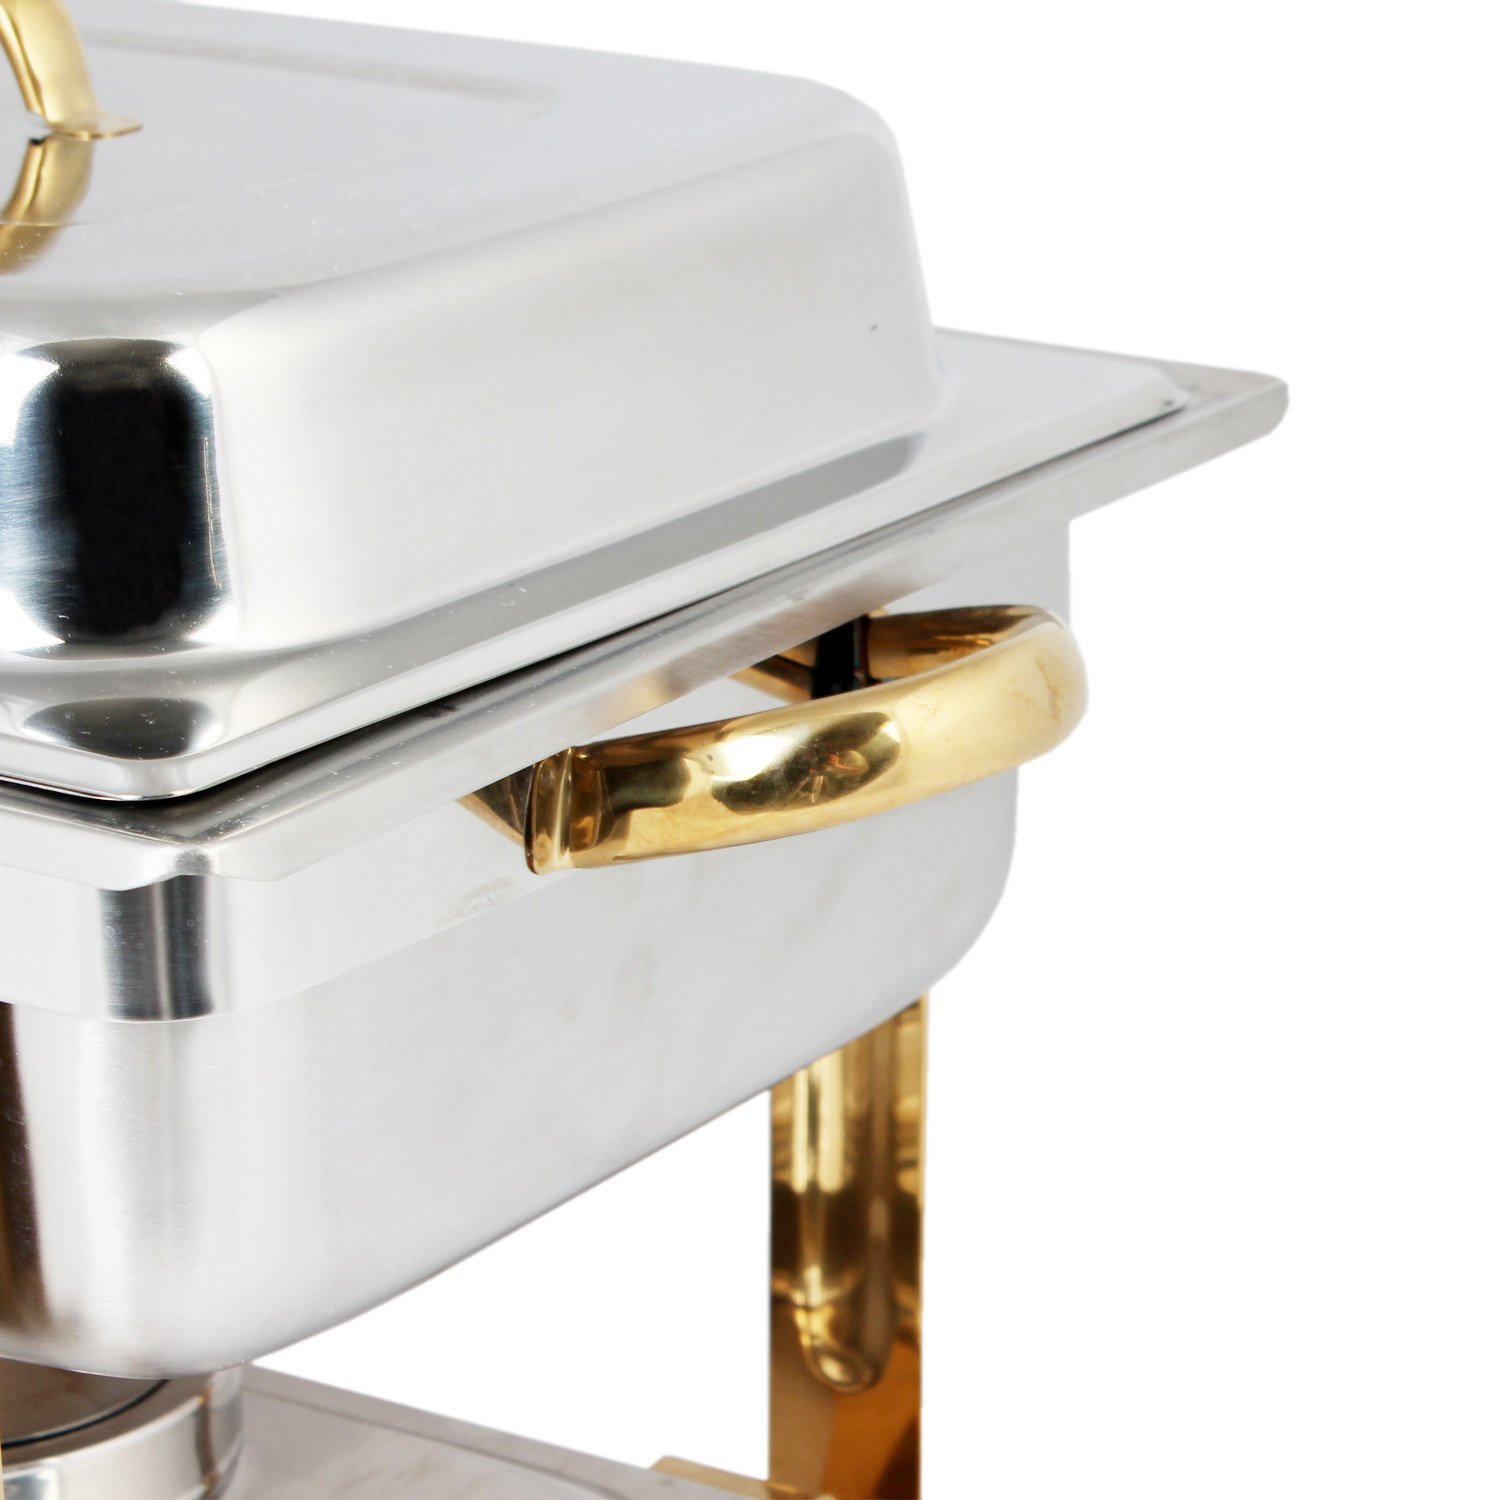 Tiger Chef Steel 4 Quart Gold Accented Chafer [Kitchen]